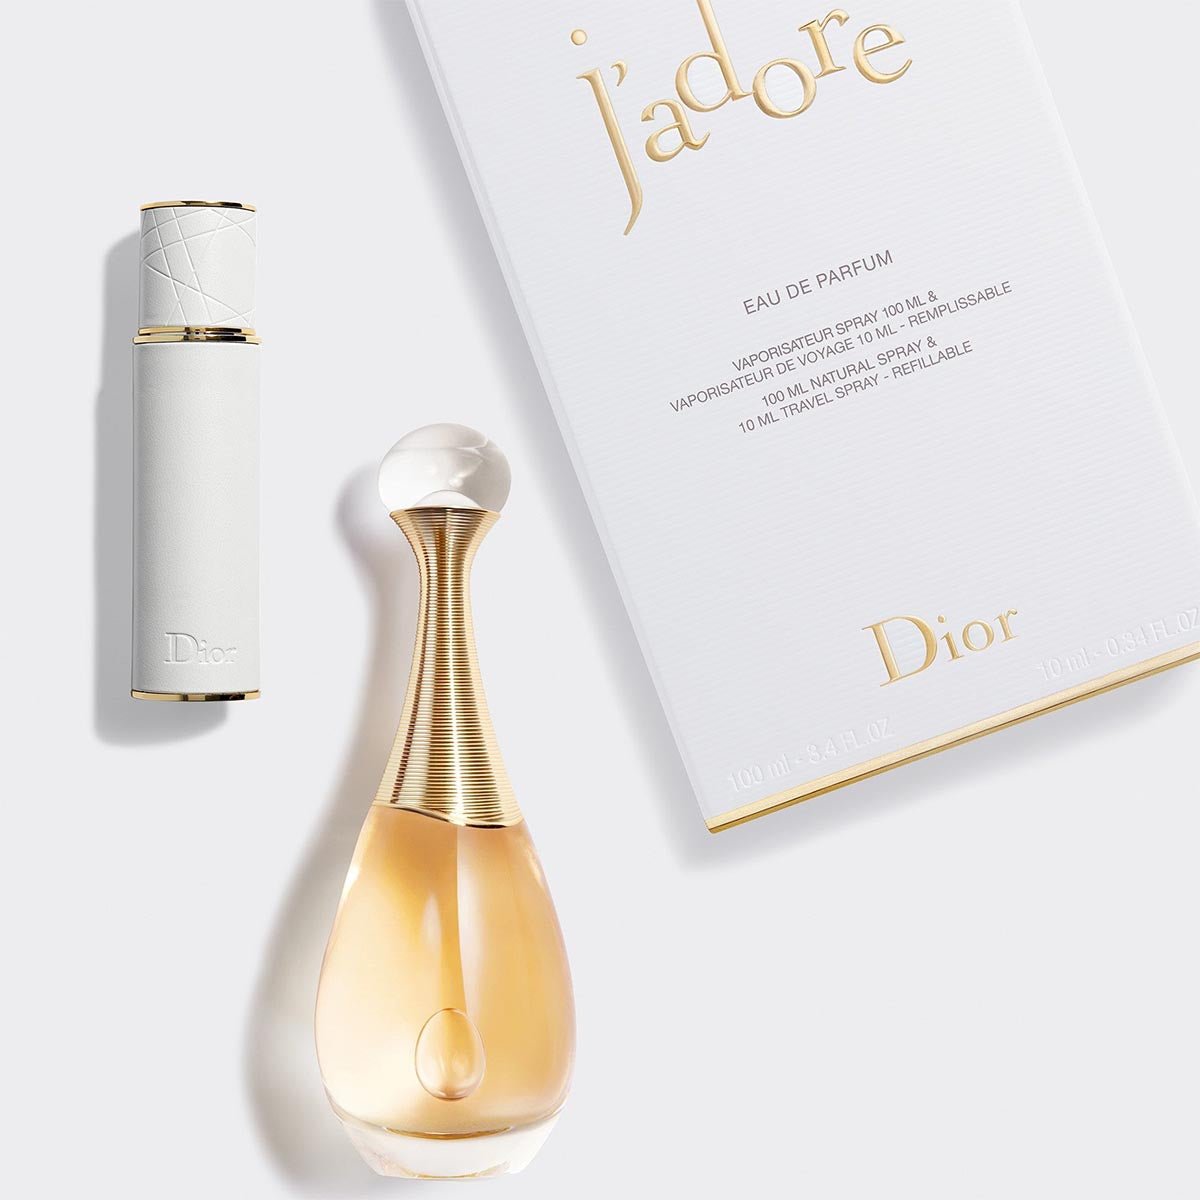 Dior J'adore EDP Travel Set | My Perfume Shop Australia